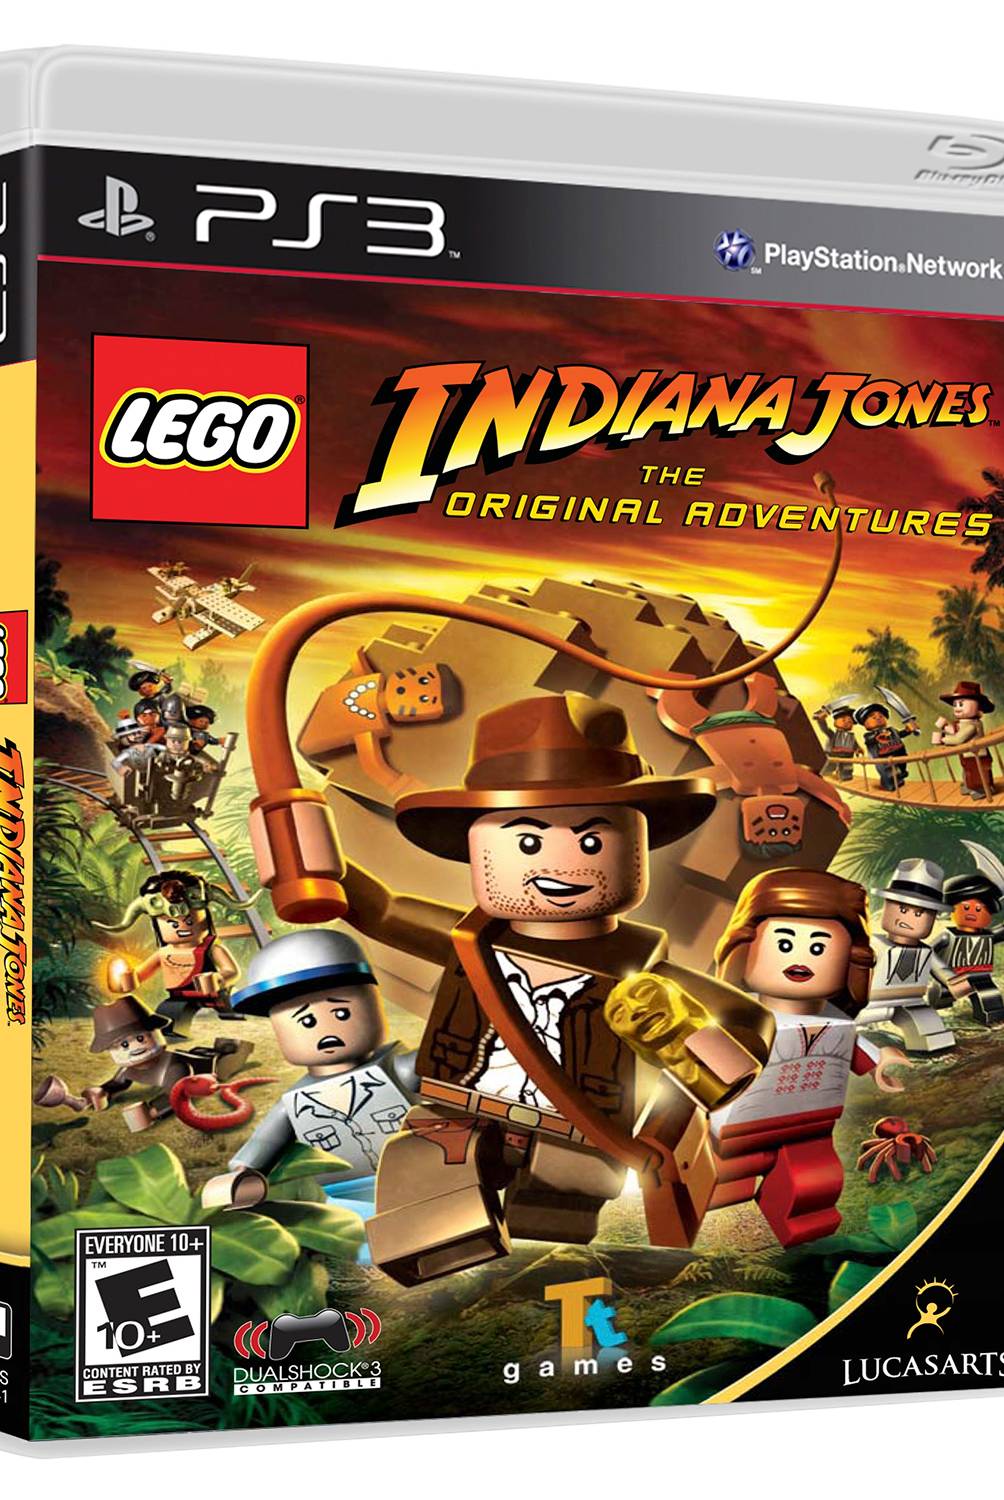 Lucas Arts - Lego Indiana Jones PS3